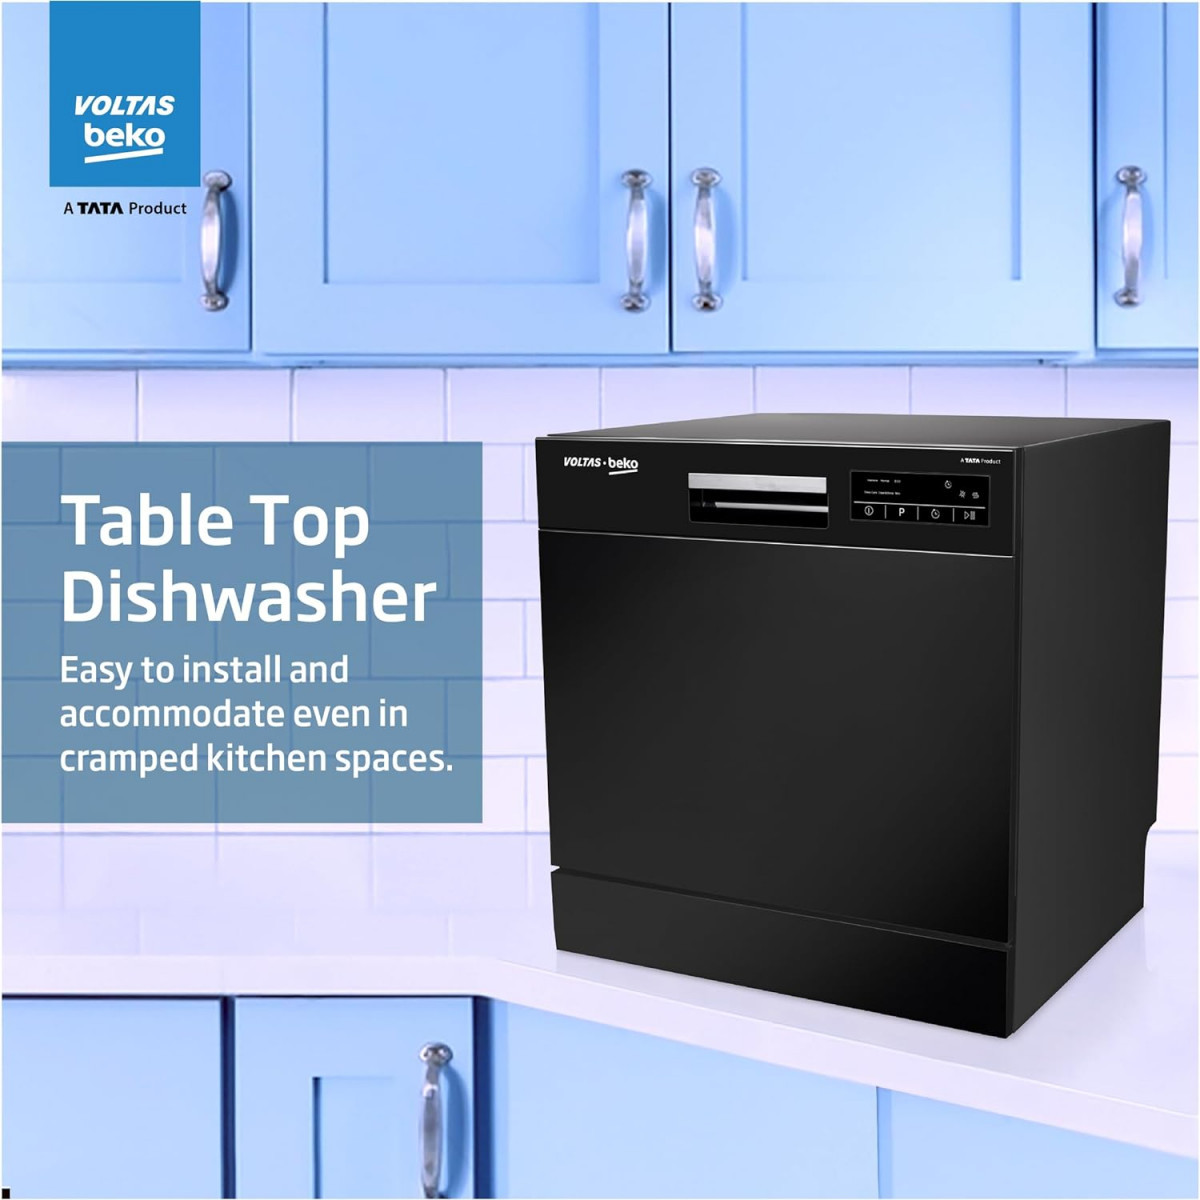 Voltas beko 8 Place Settings Table Top Dishwasher 20202021DT8B Black Inbuilt Heater